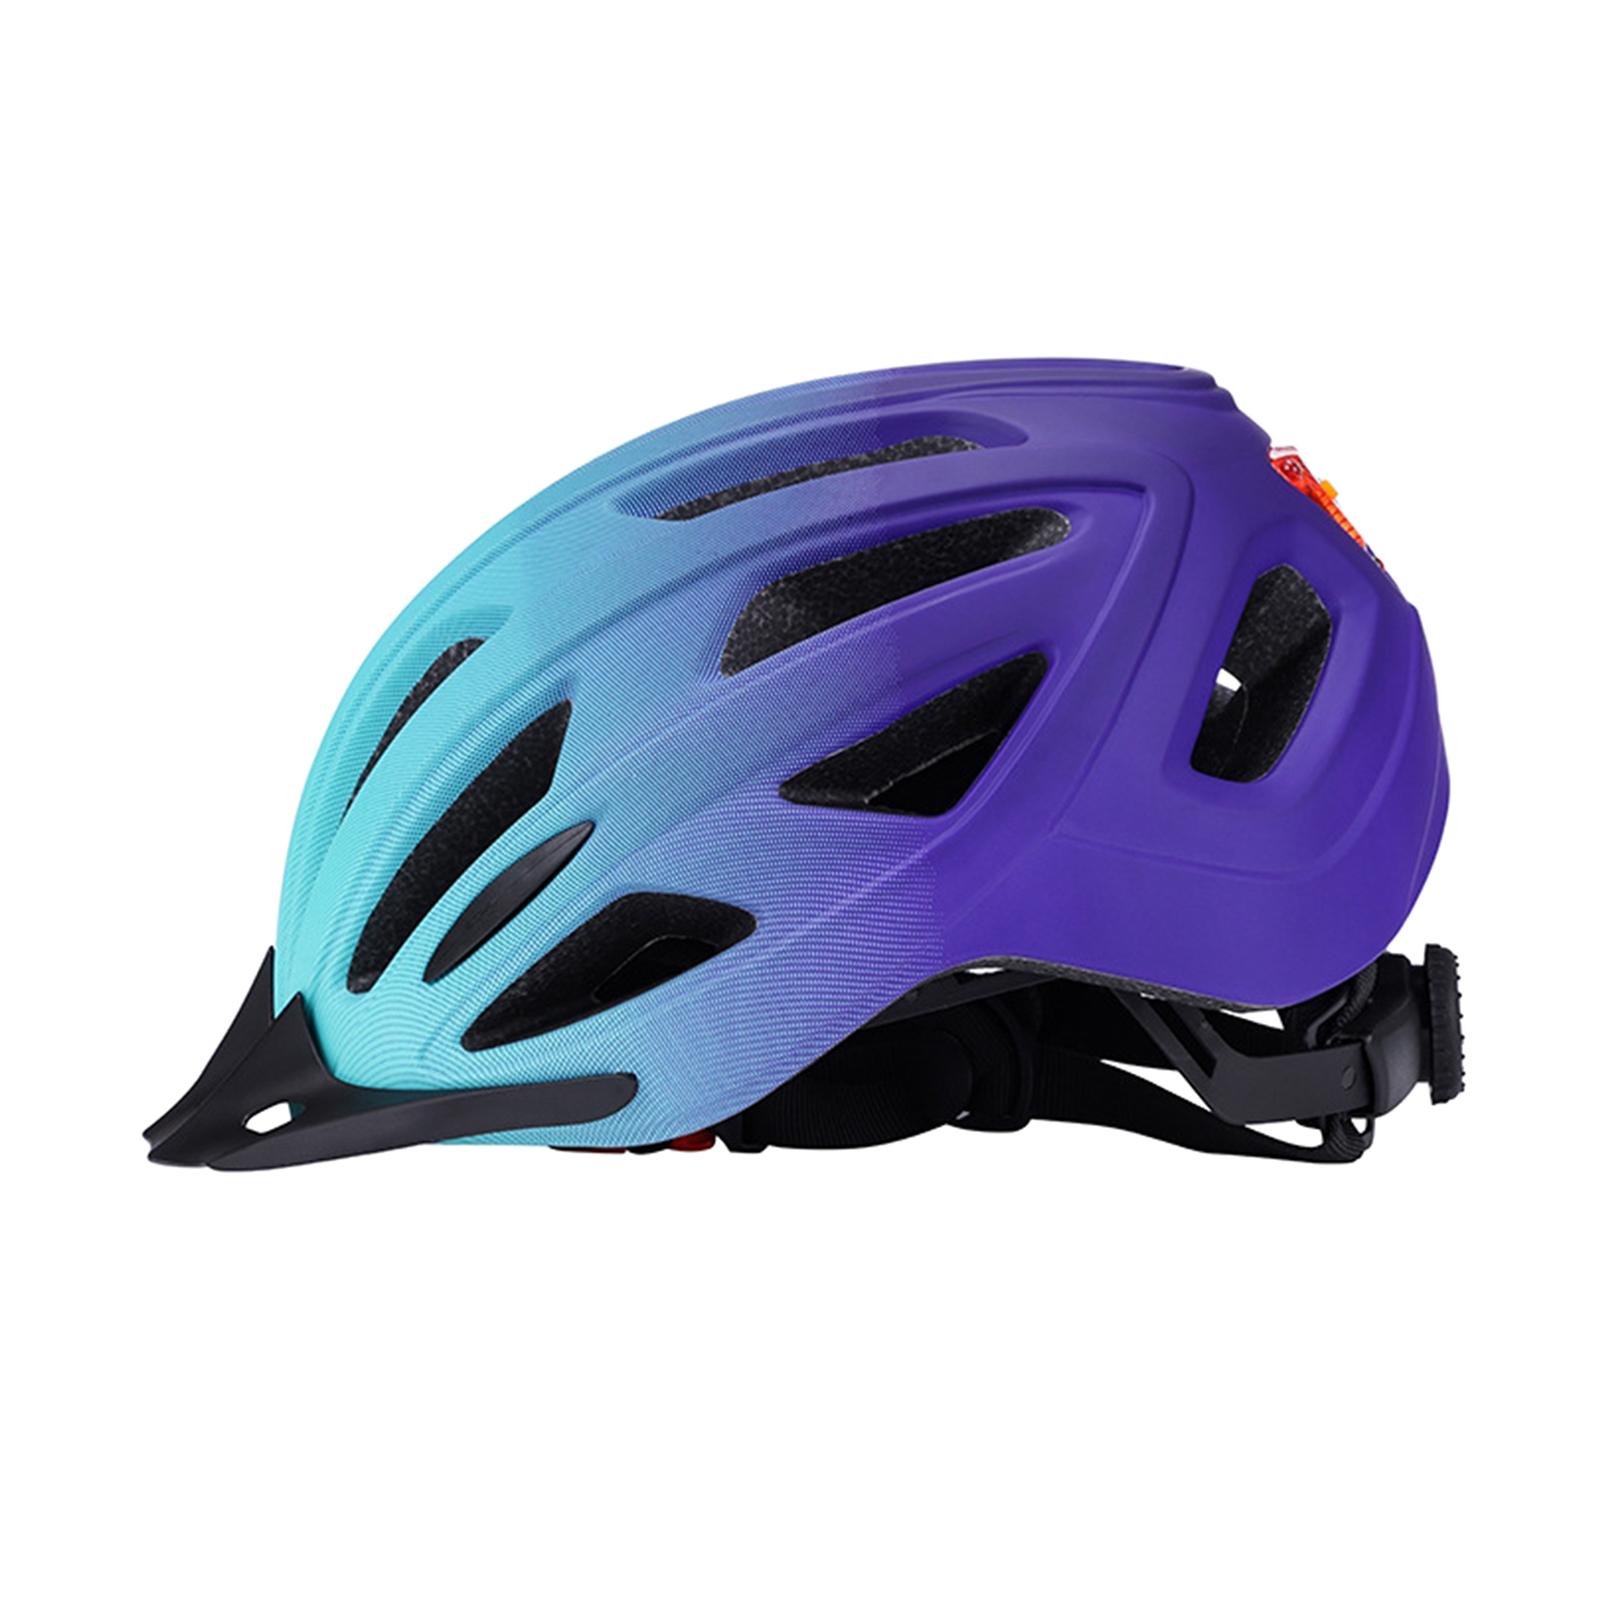 Bicycle Helmet Head Protective Lightweight with LED Safety Light Bike Helmet Blue Purple